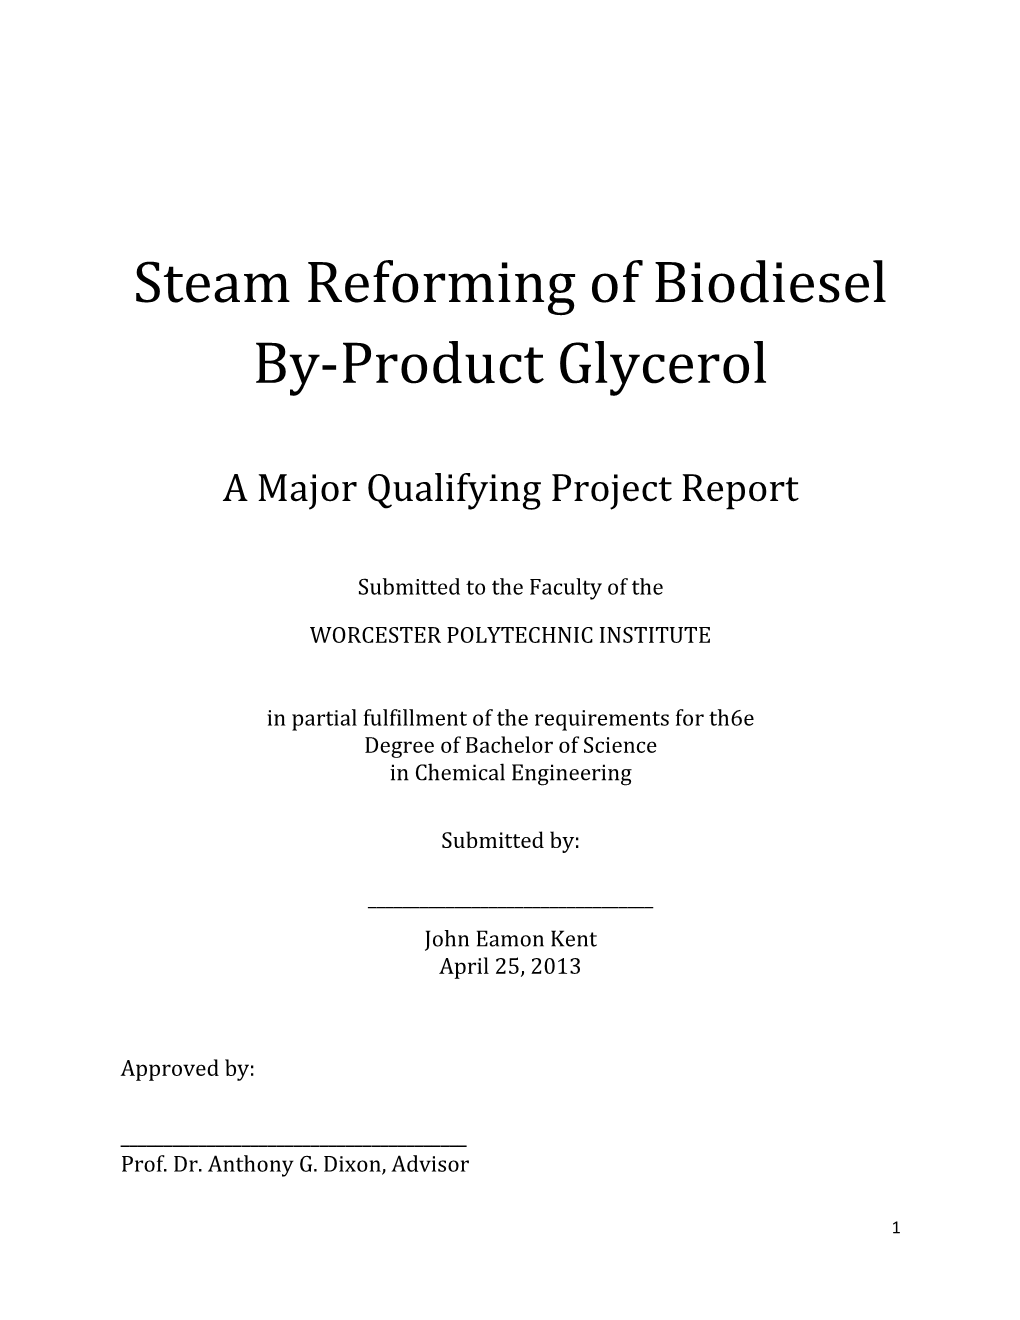 Steam Reforming of Biodiesel By-Product Glycerol